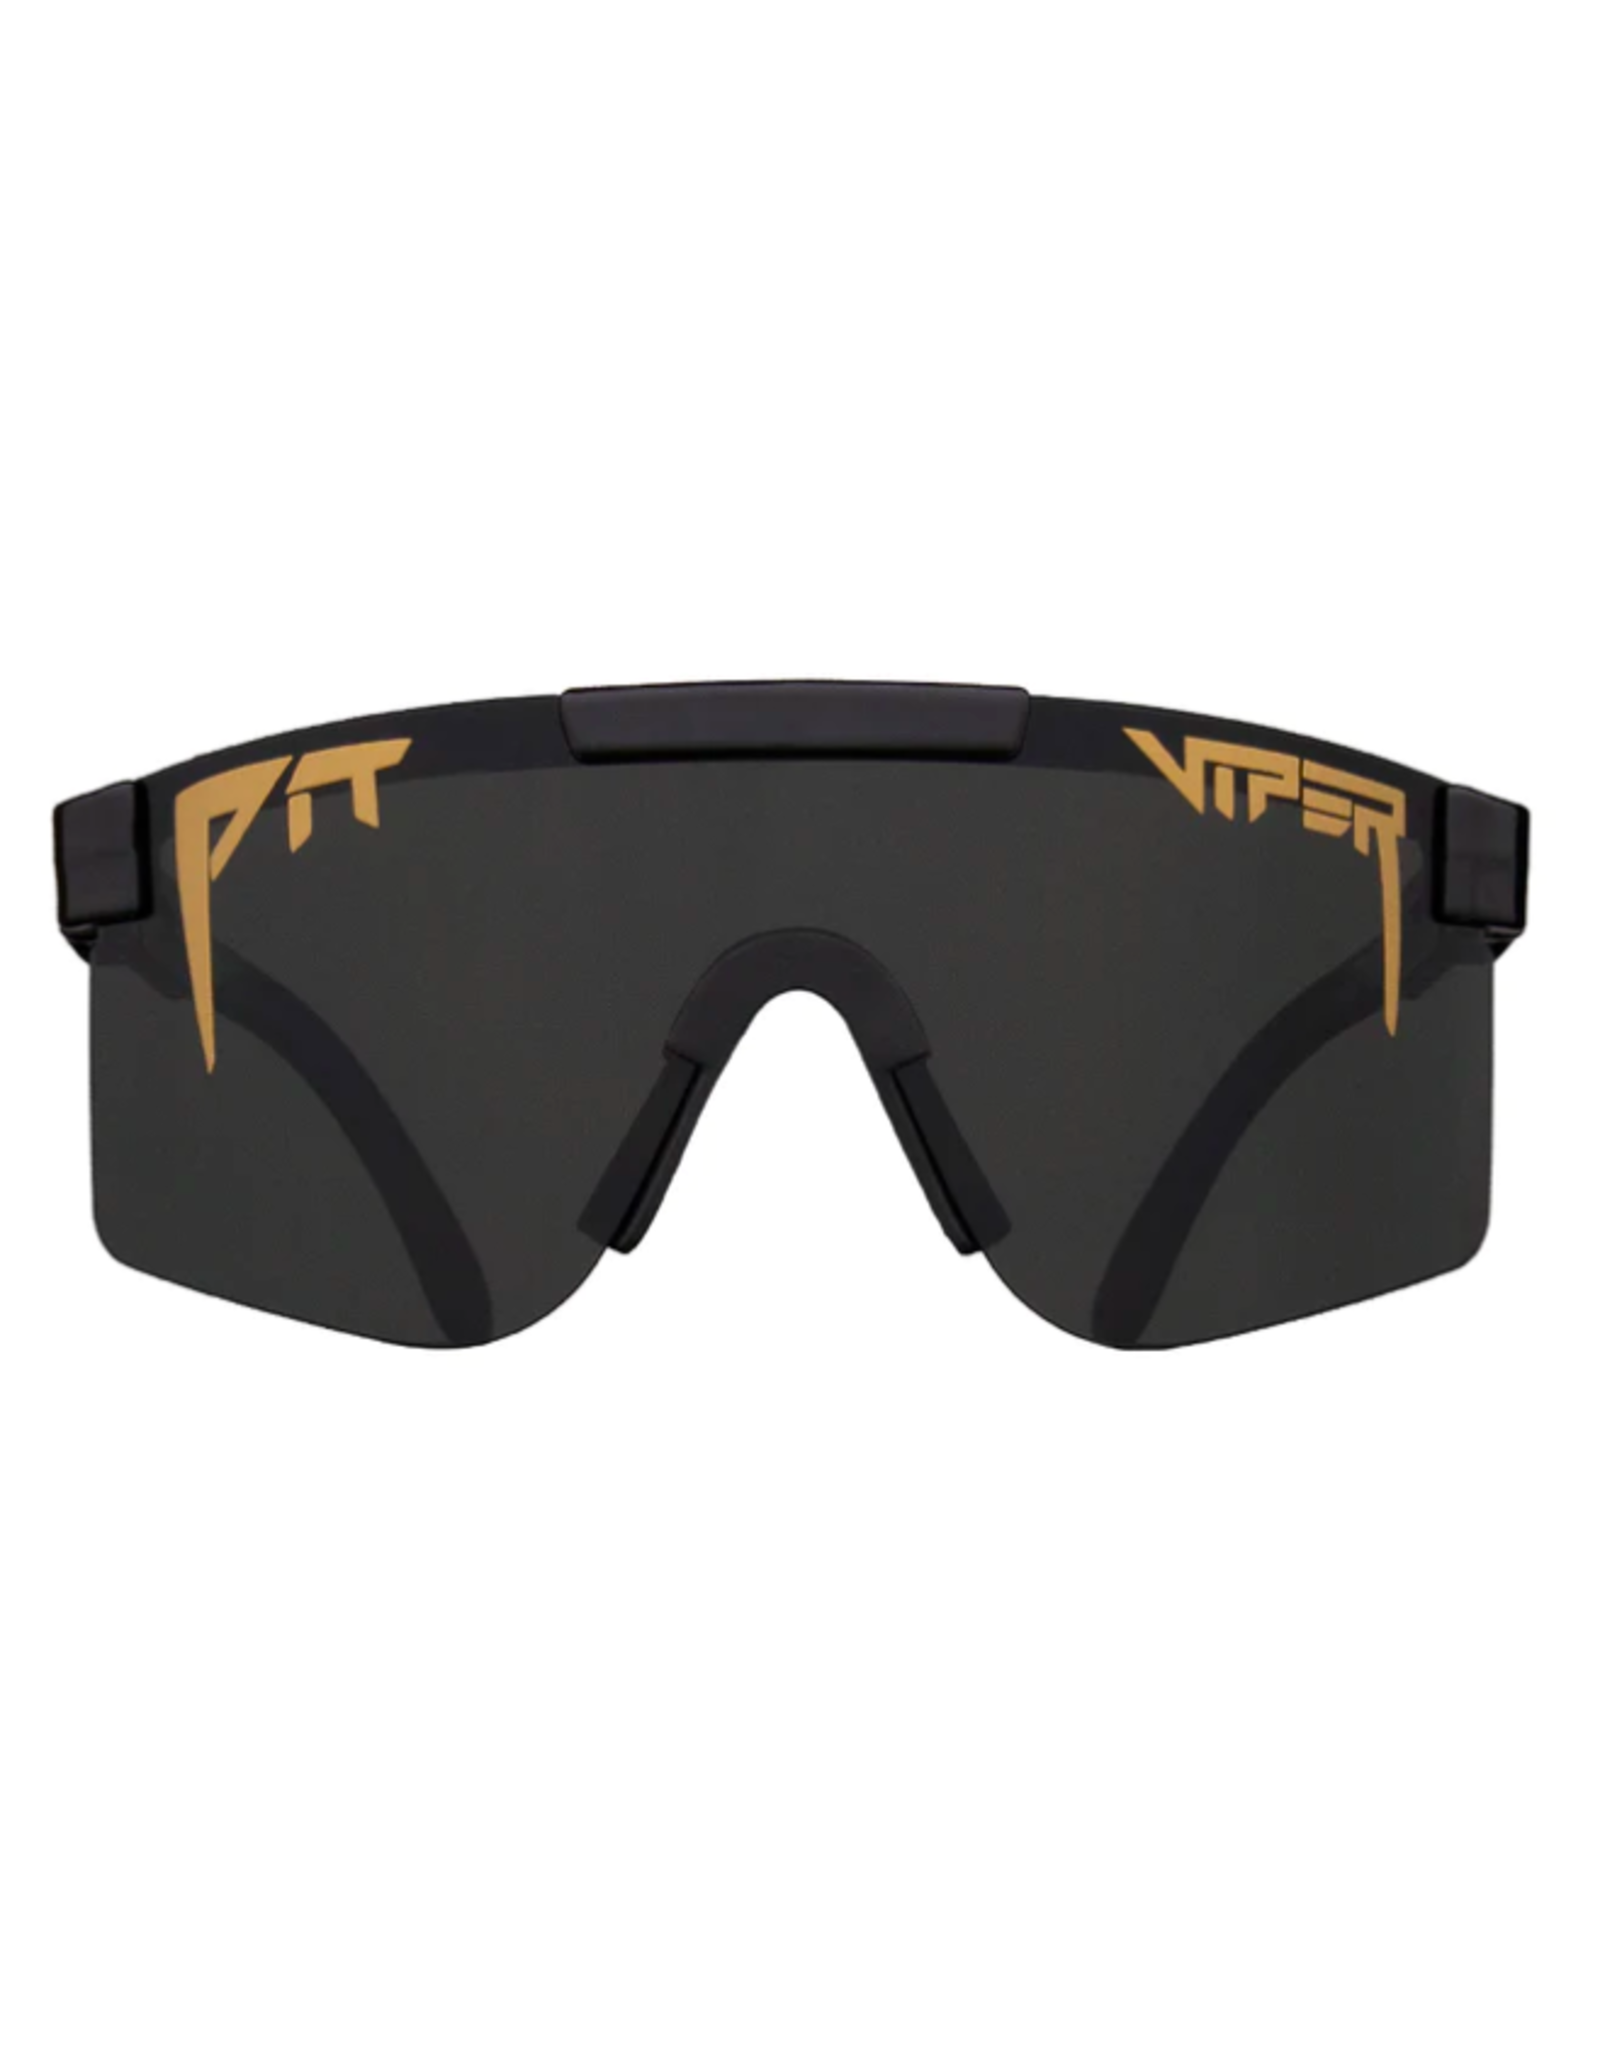 PIT VIPER Pit Viper The Exec Double Wide Sunglasses